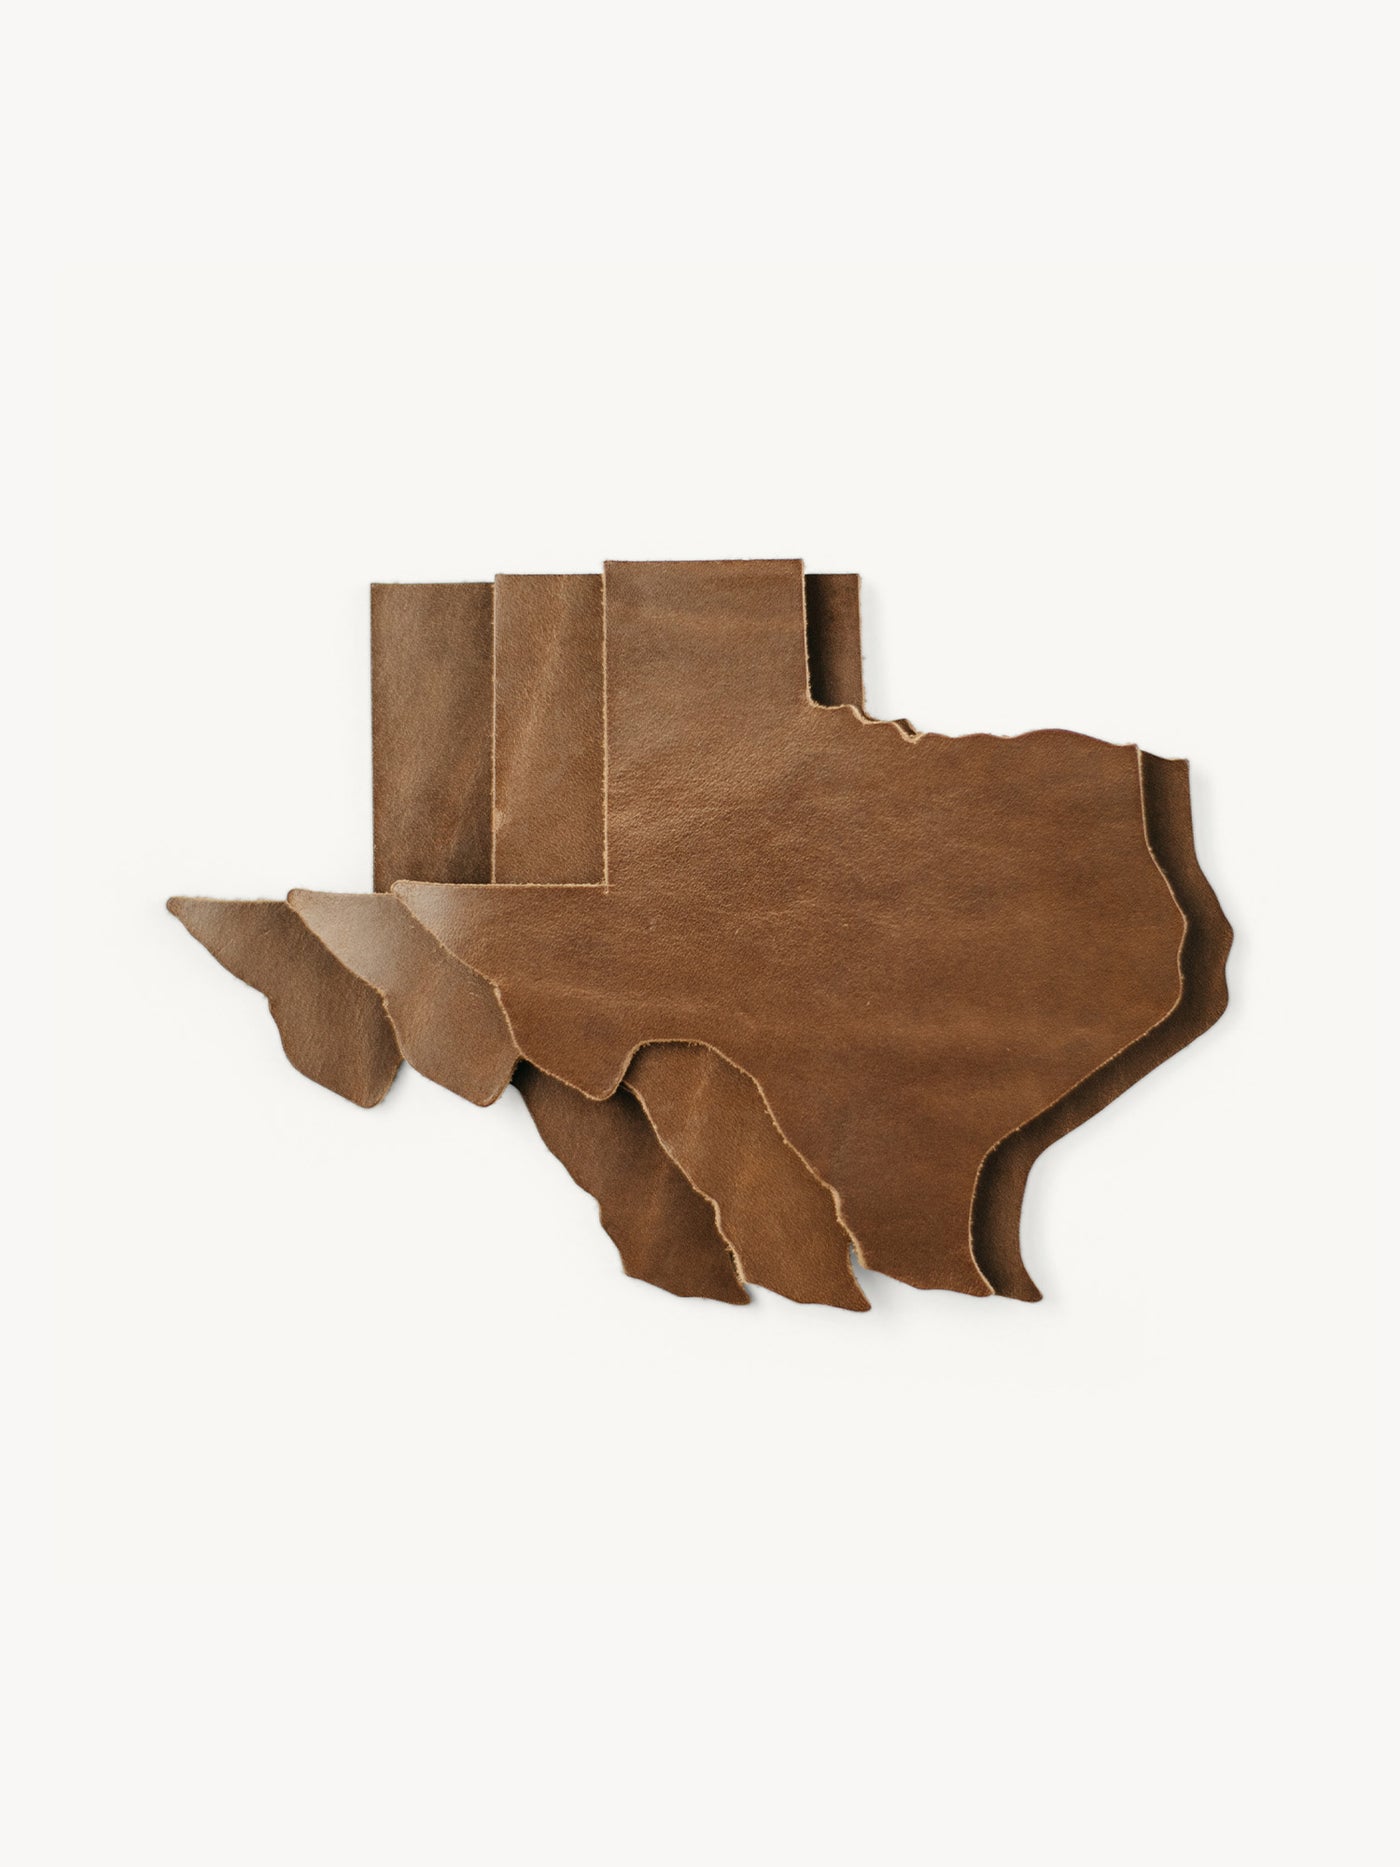 Texas State Shape Coaster